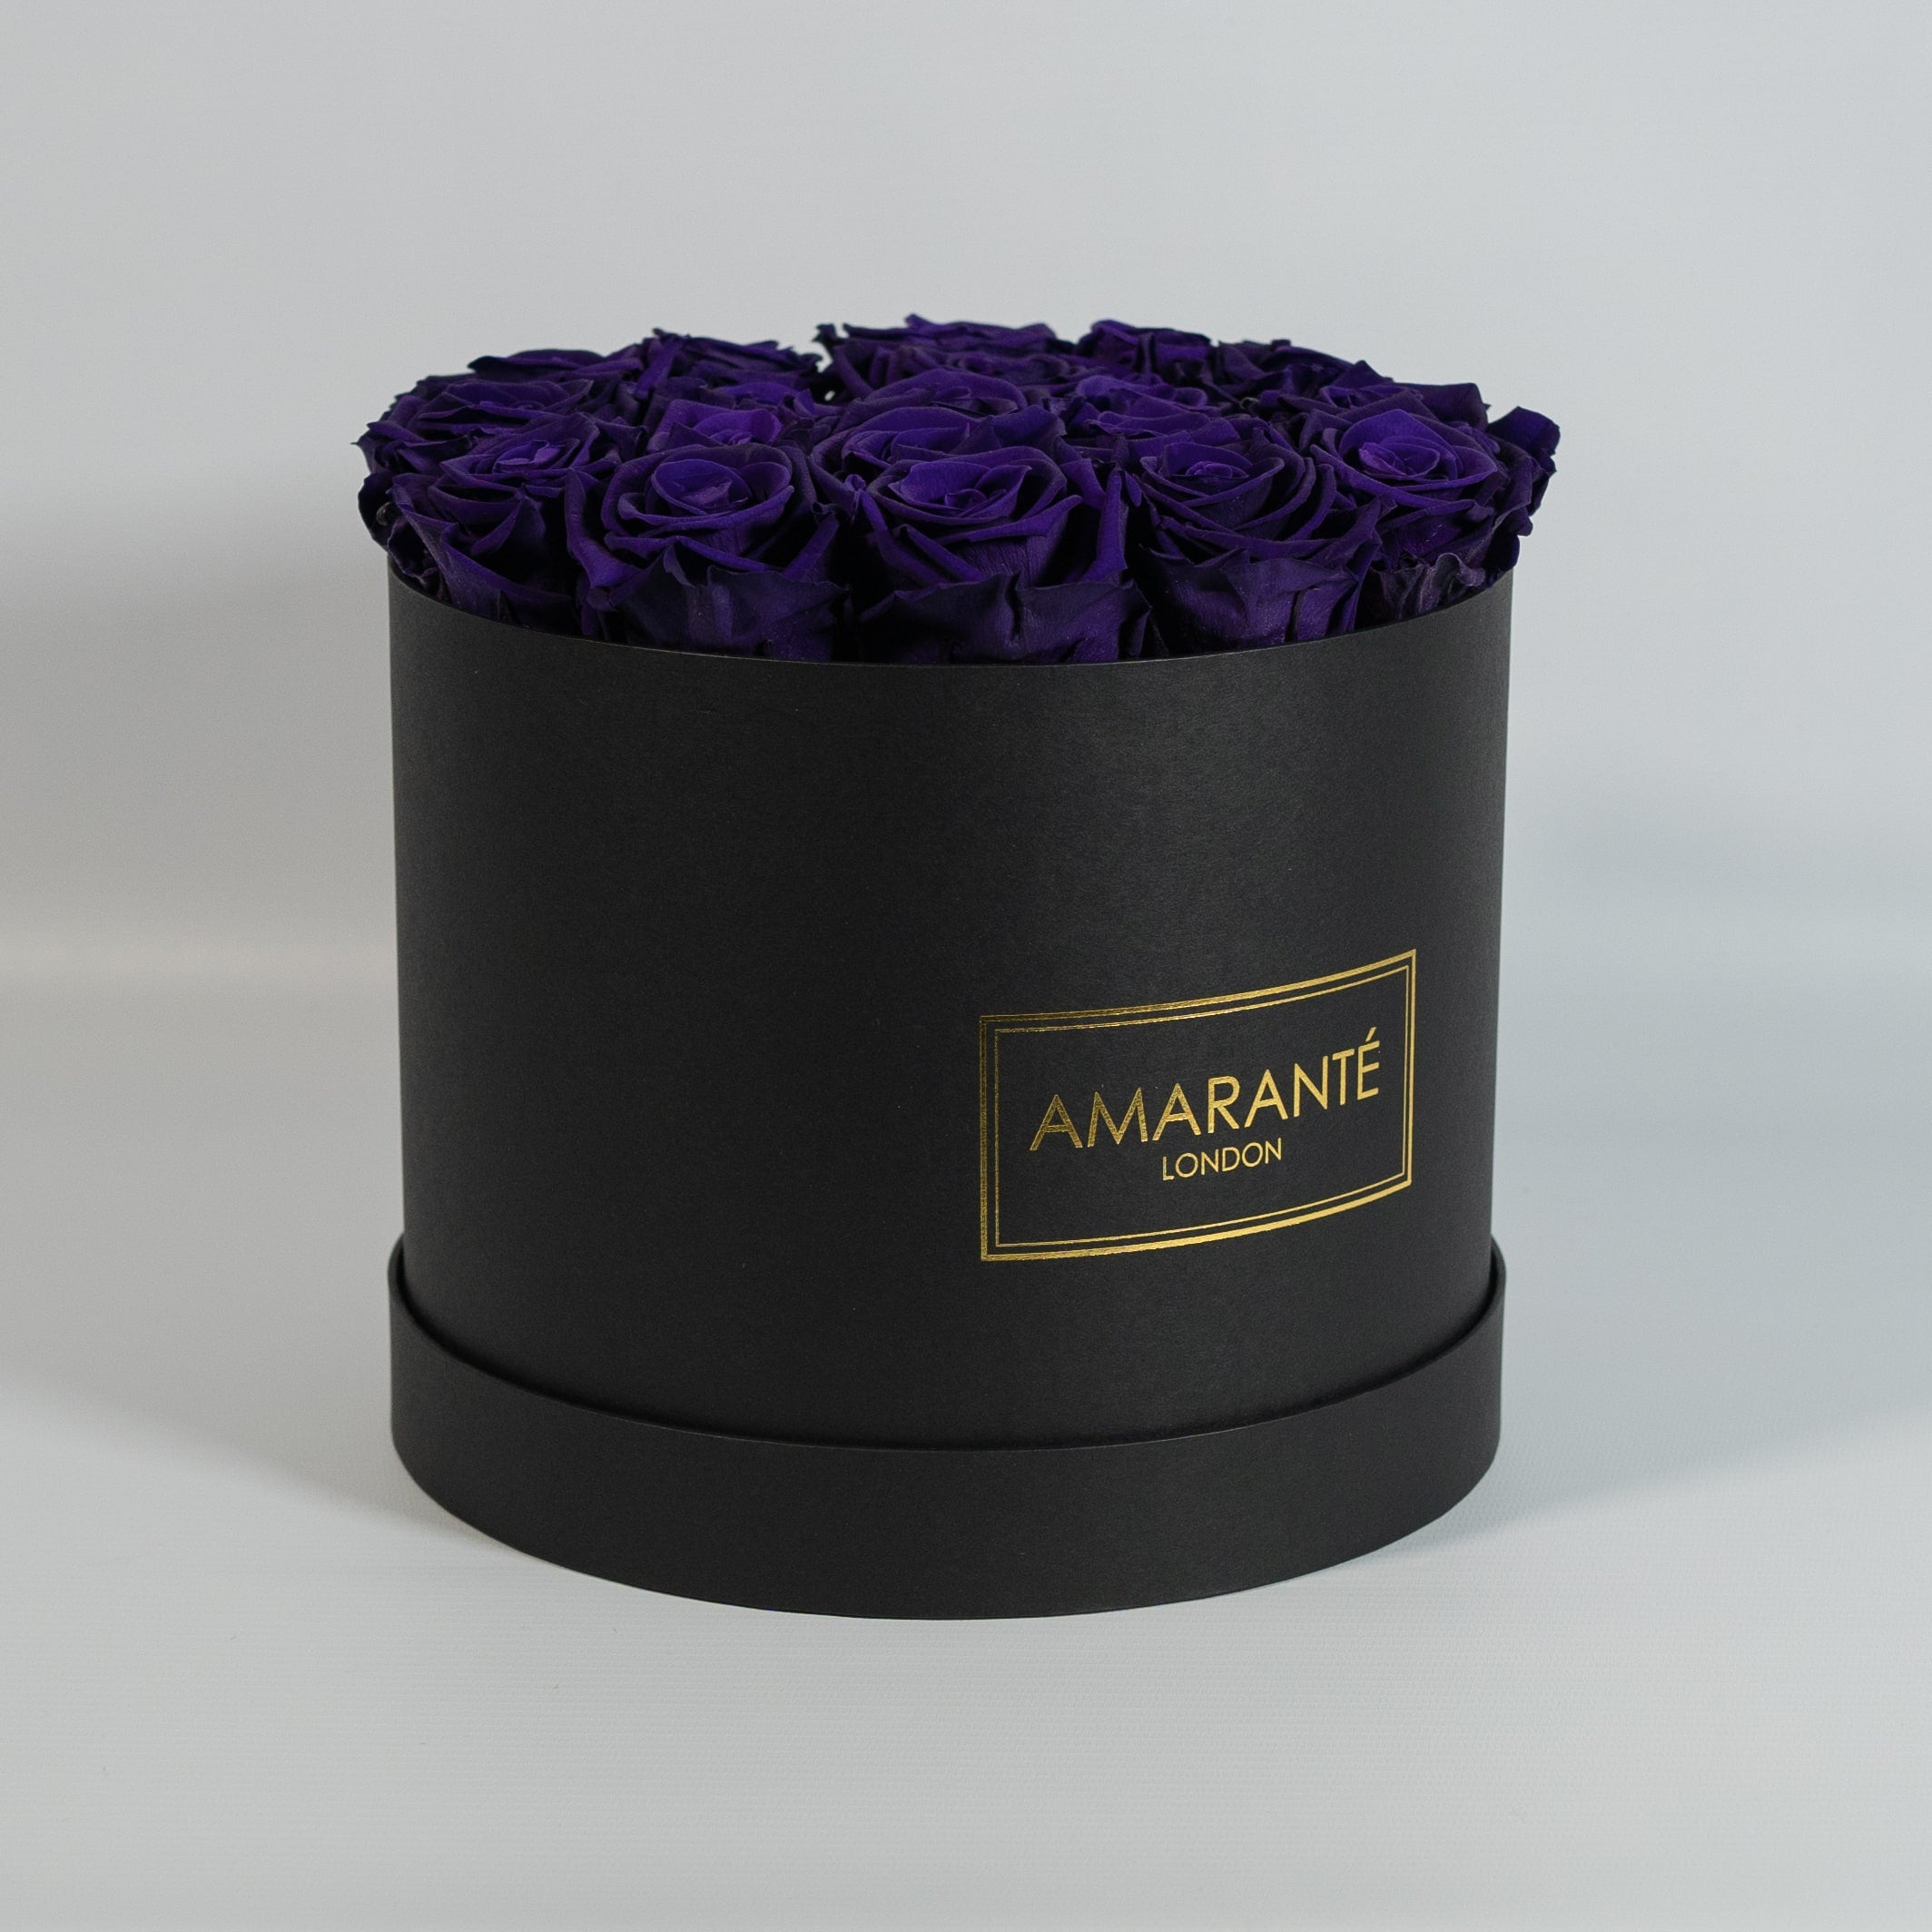 Luxurious dark purple Roses featured in a modish black box